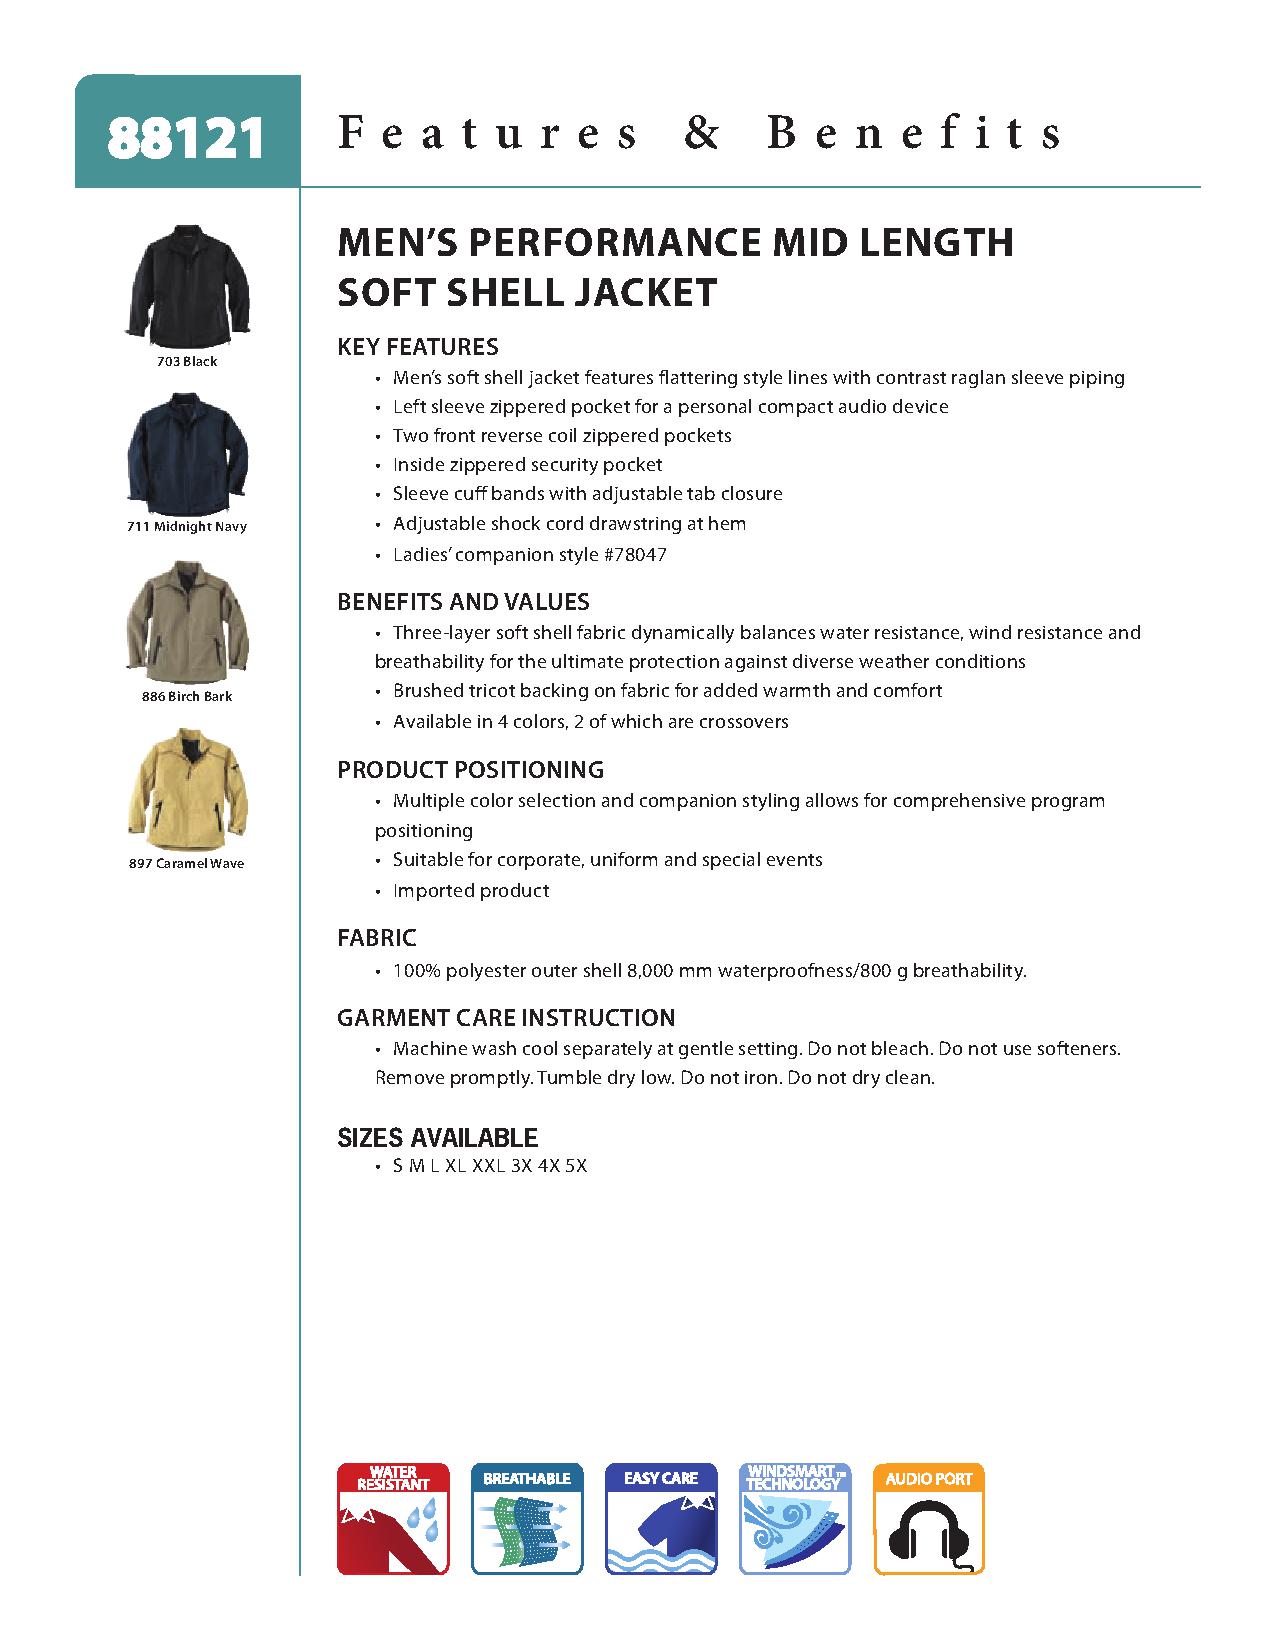 Ash City Performance Jackets 88121 - Men's Performance Mid-Length Soft Shell Jacket